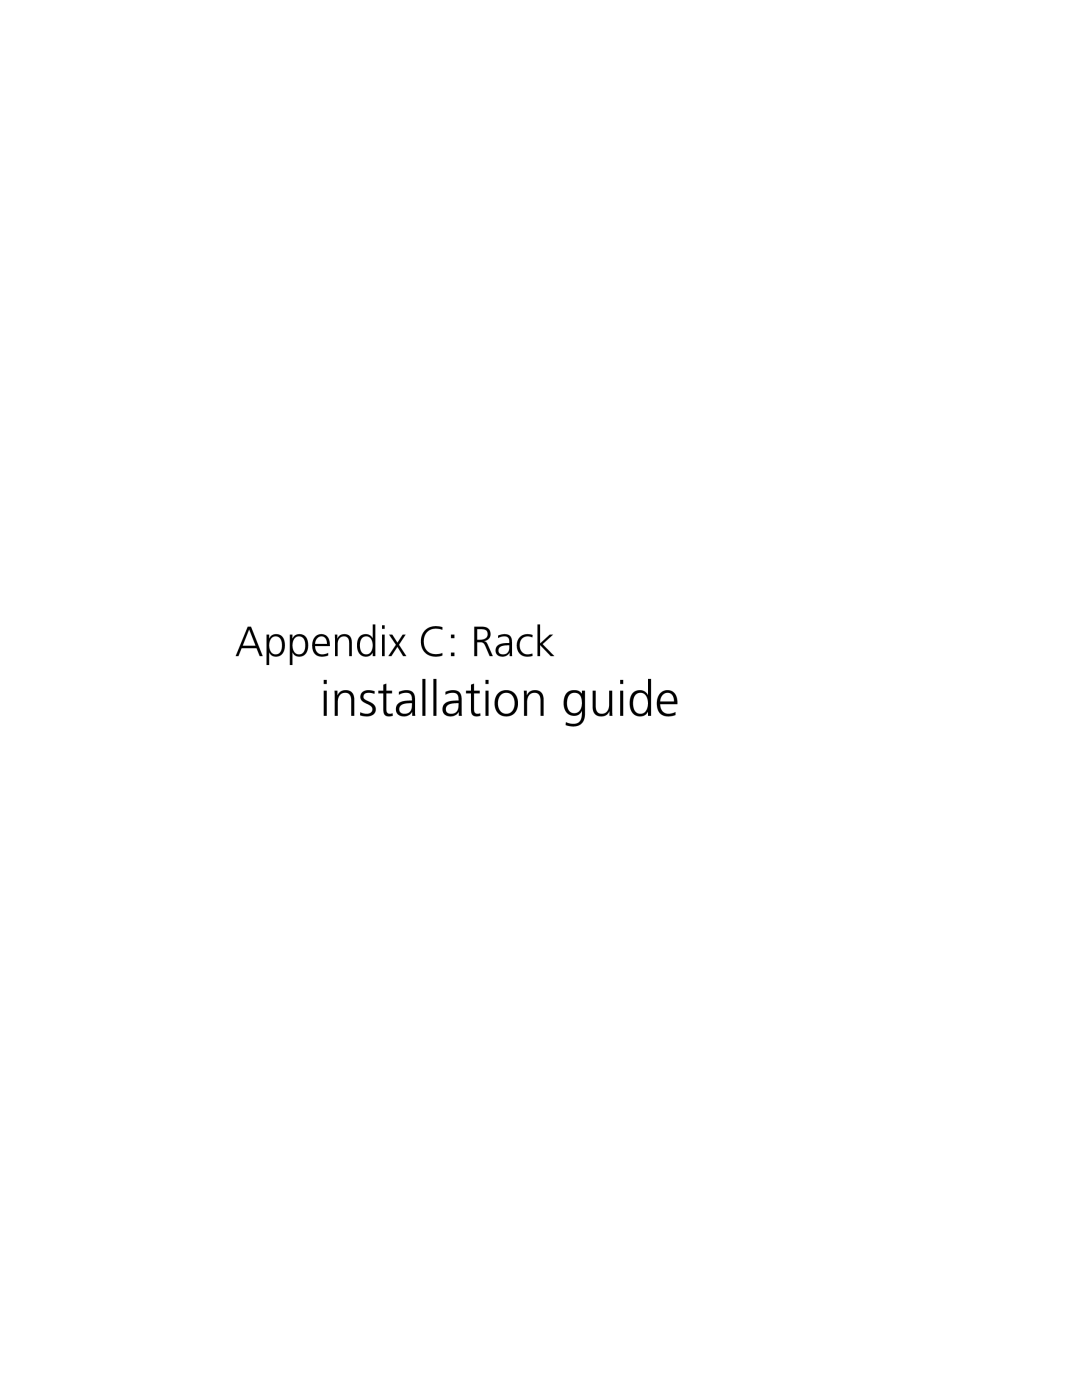 Acer G301 manual installation guide, Appendix C Rack 